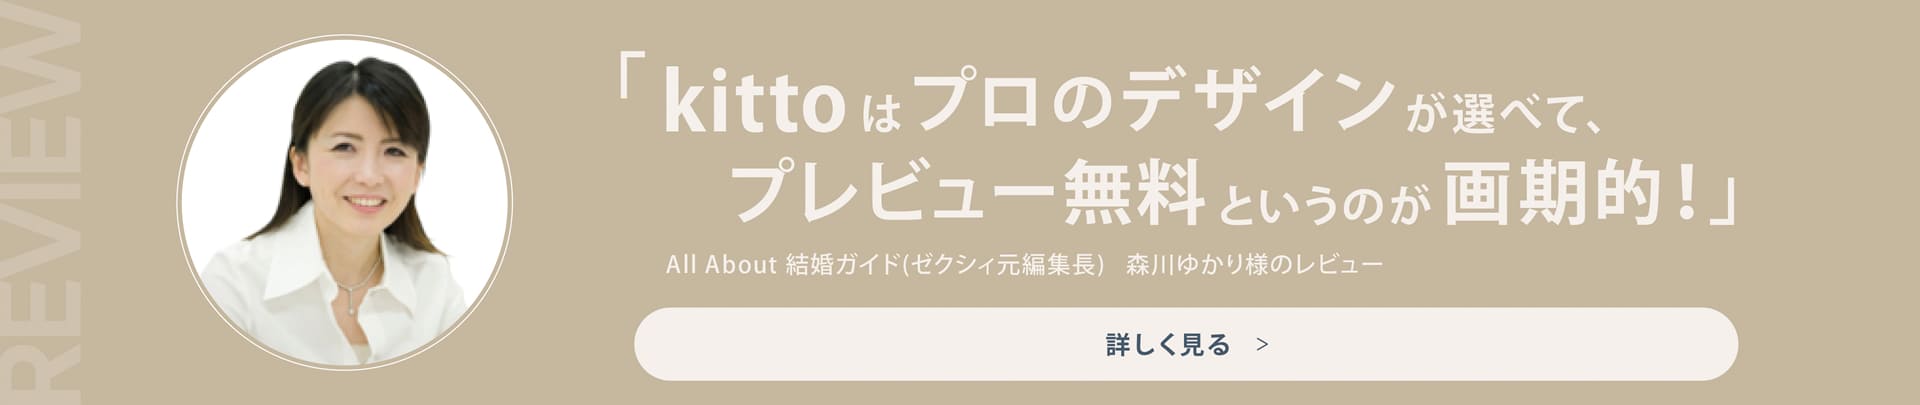 「kittoはプロのデザインが選べて、プレビュー無料というのが画期的！」All About 結婚ガイド（ゼクシィ元編集長）森川ゆかり様のレビュー